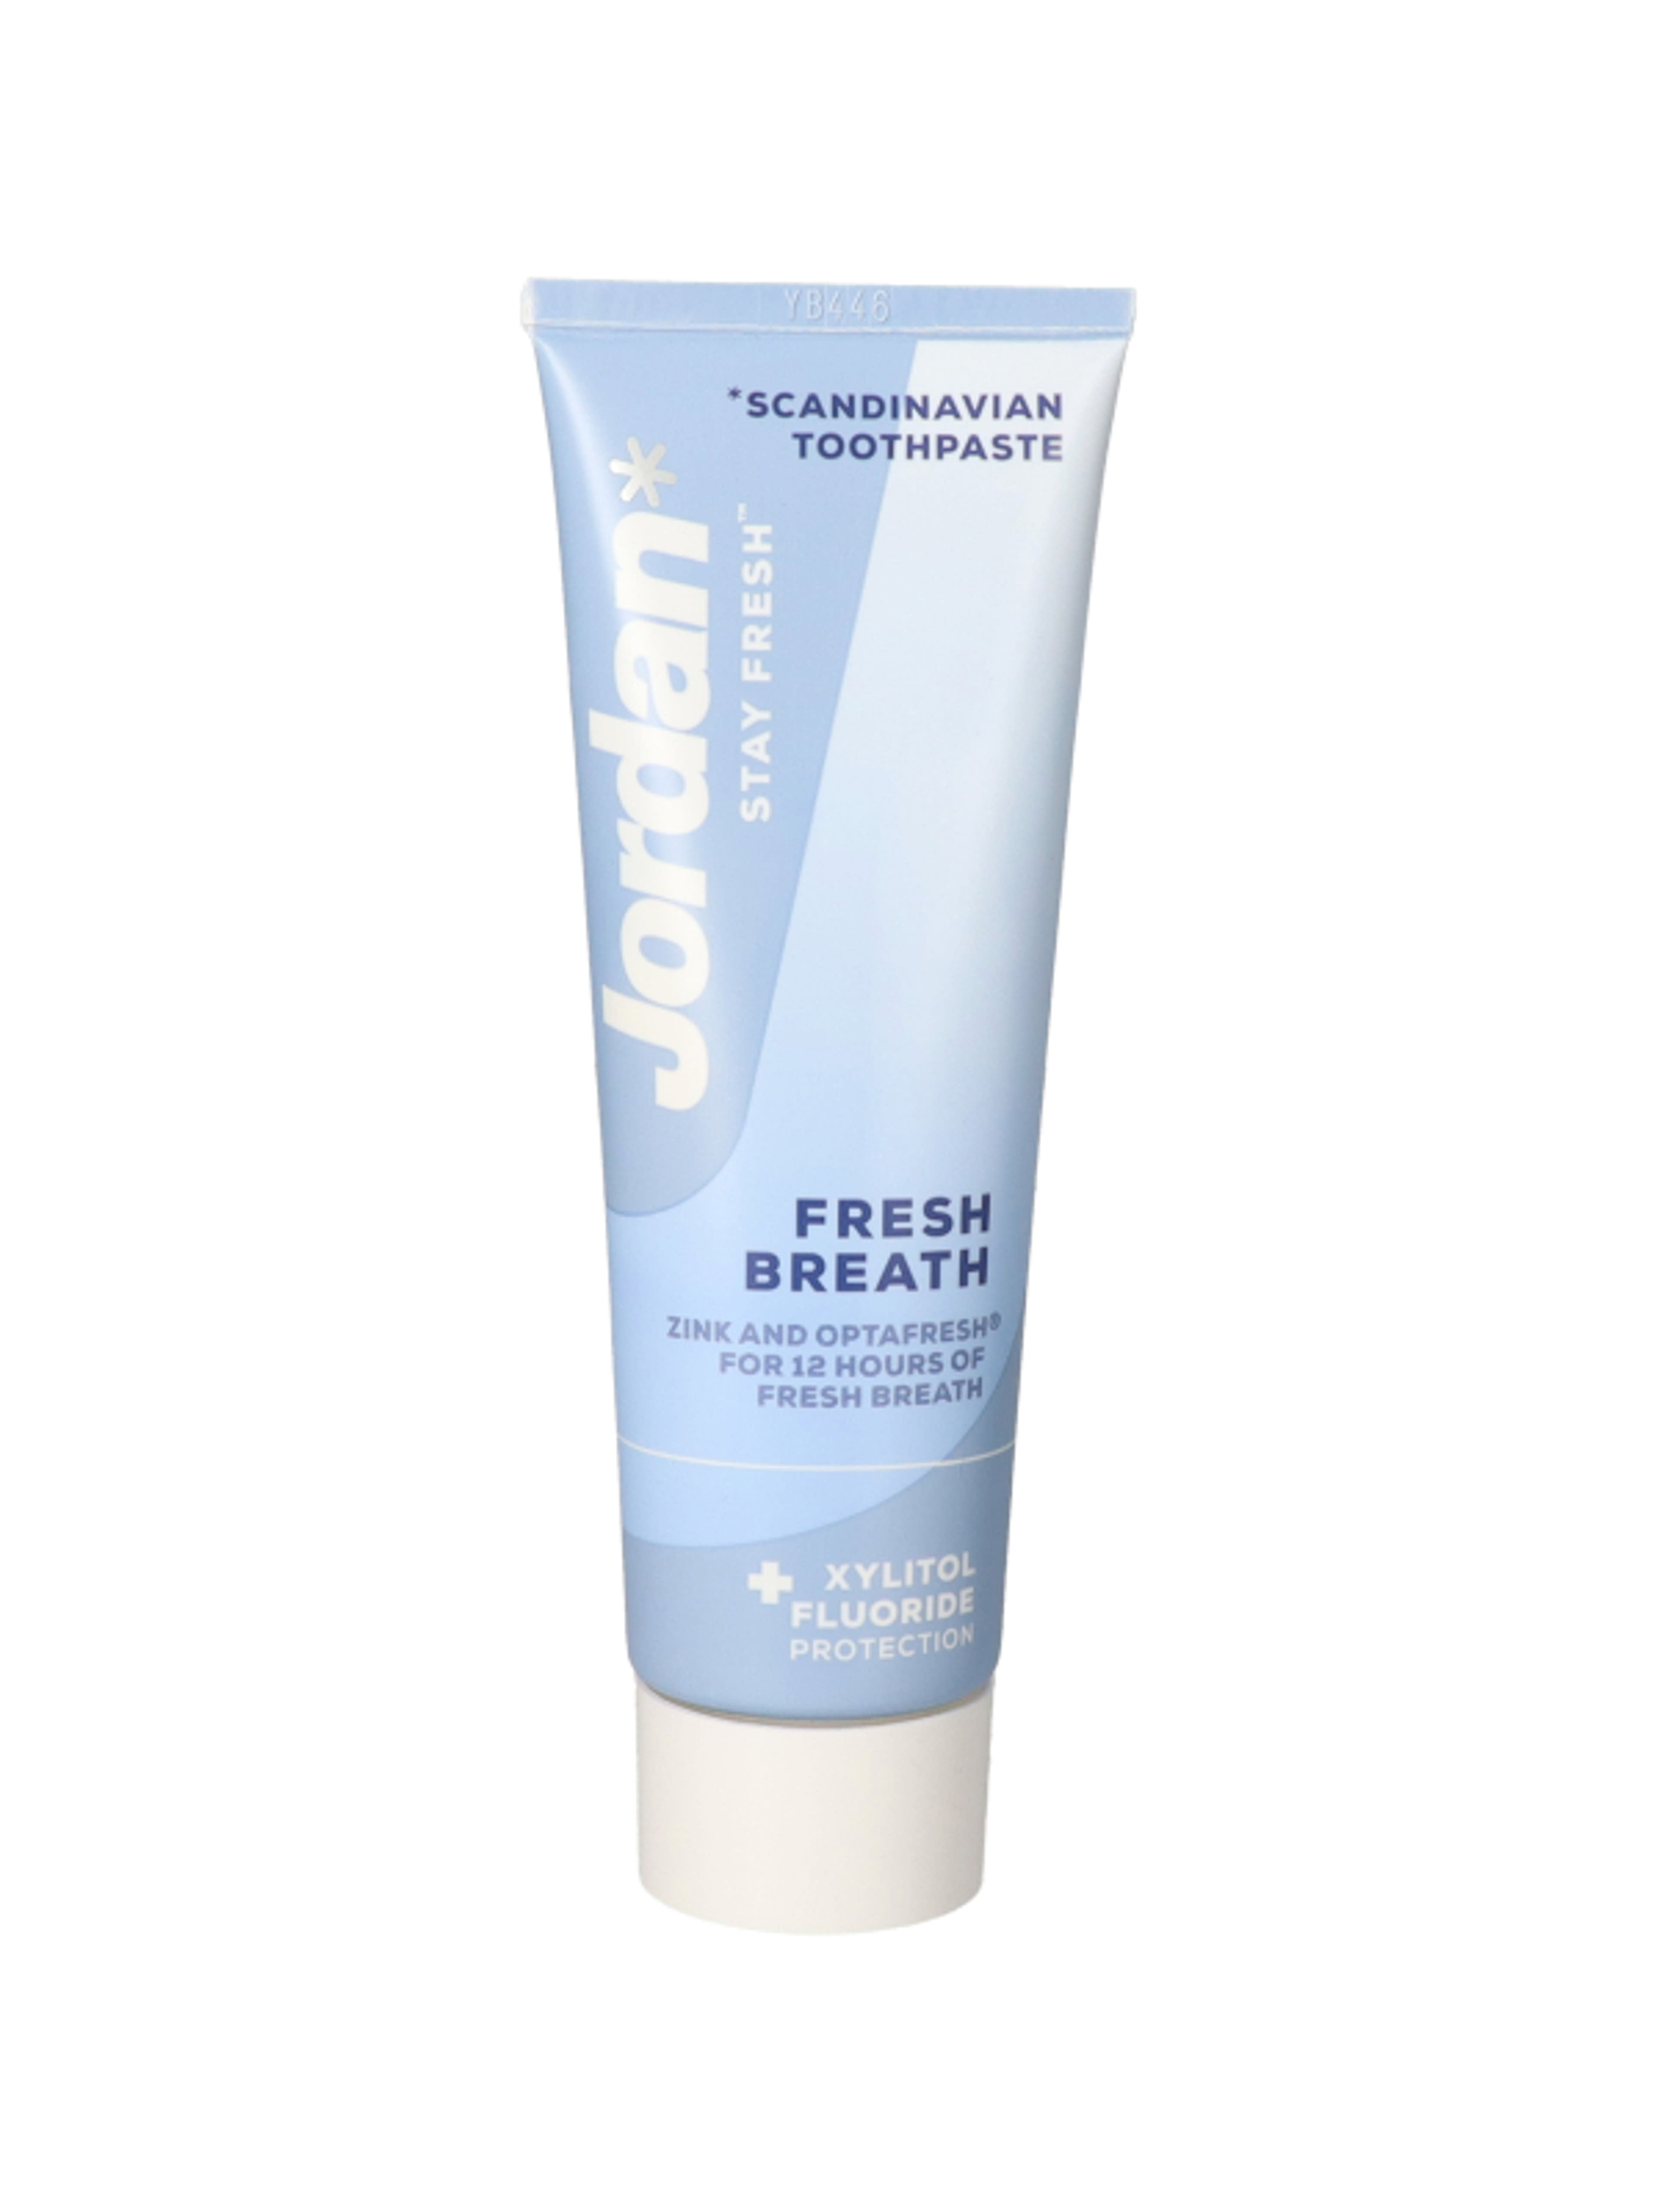 Jordan Stay Fresh Breath fogkrém - 75 ml